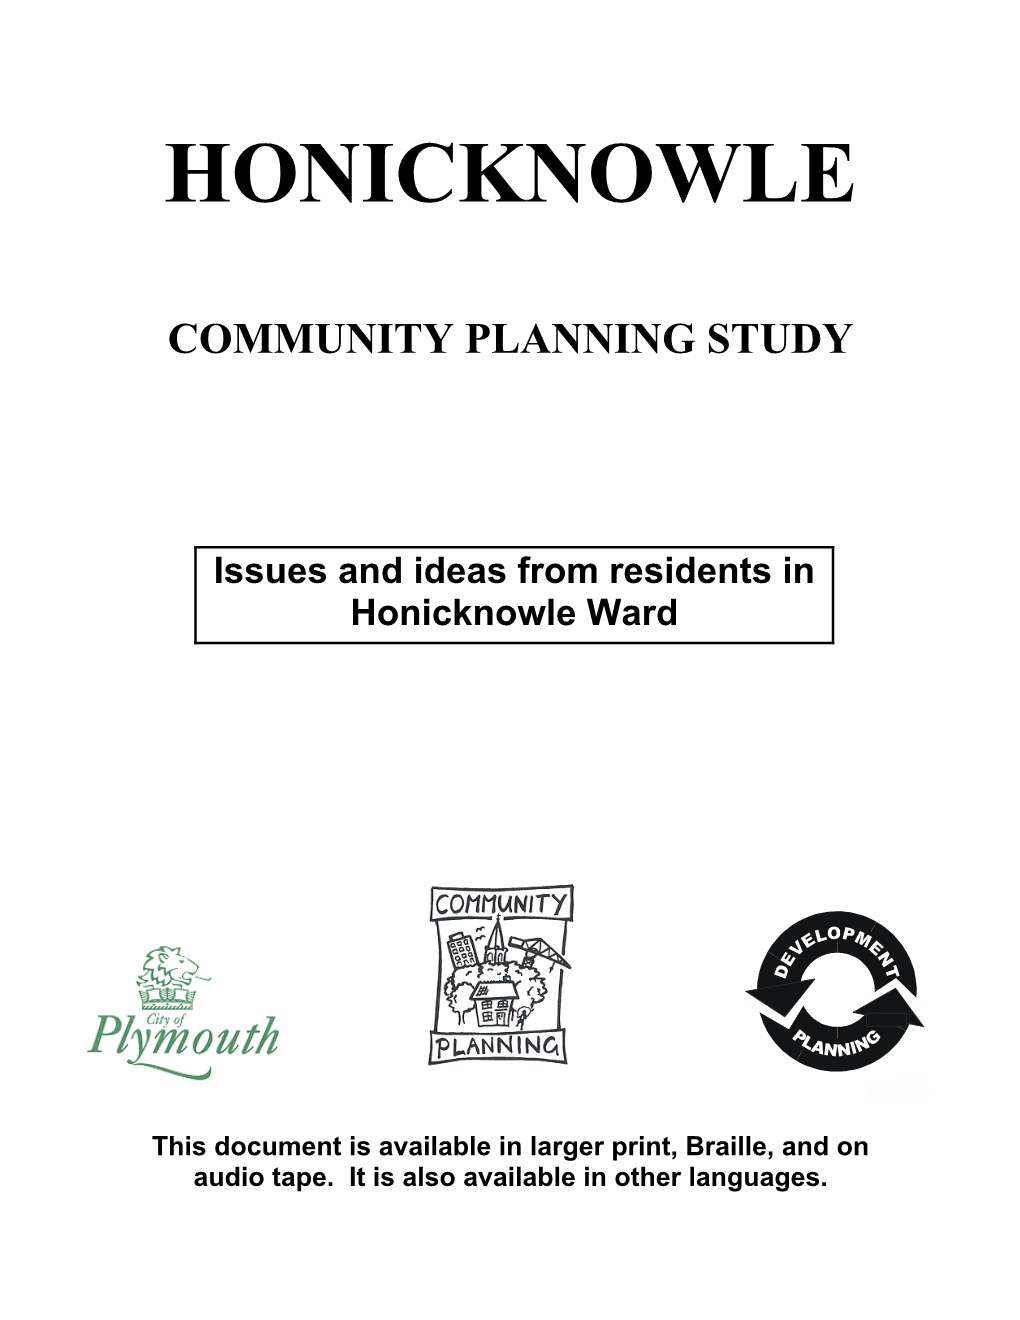 Community Planning Study: Honicknowle